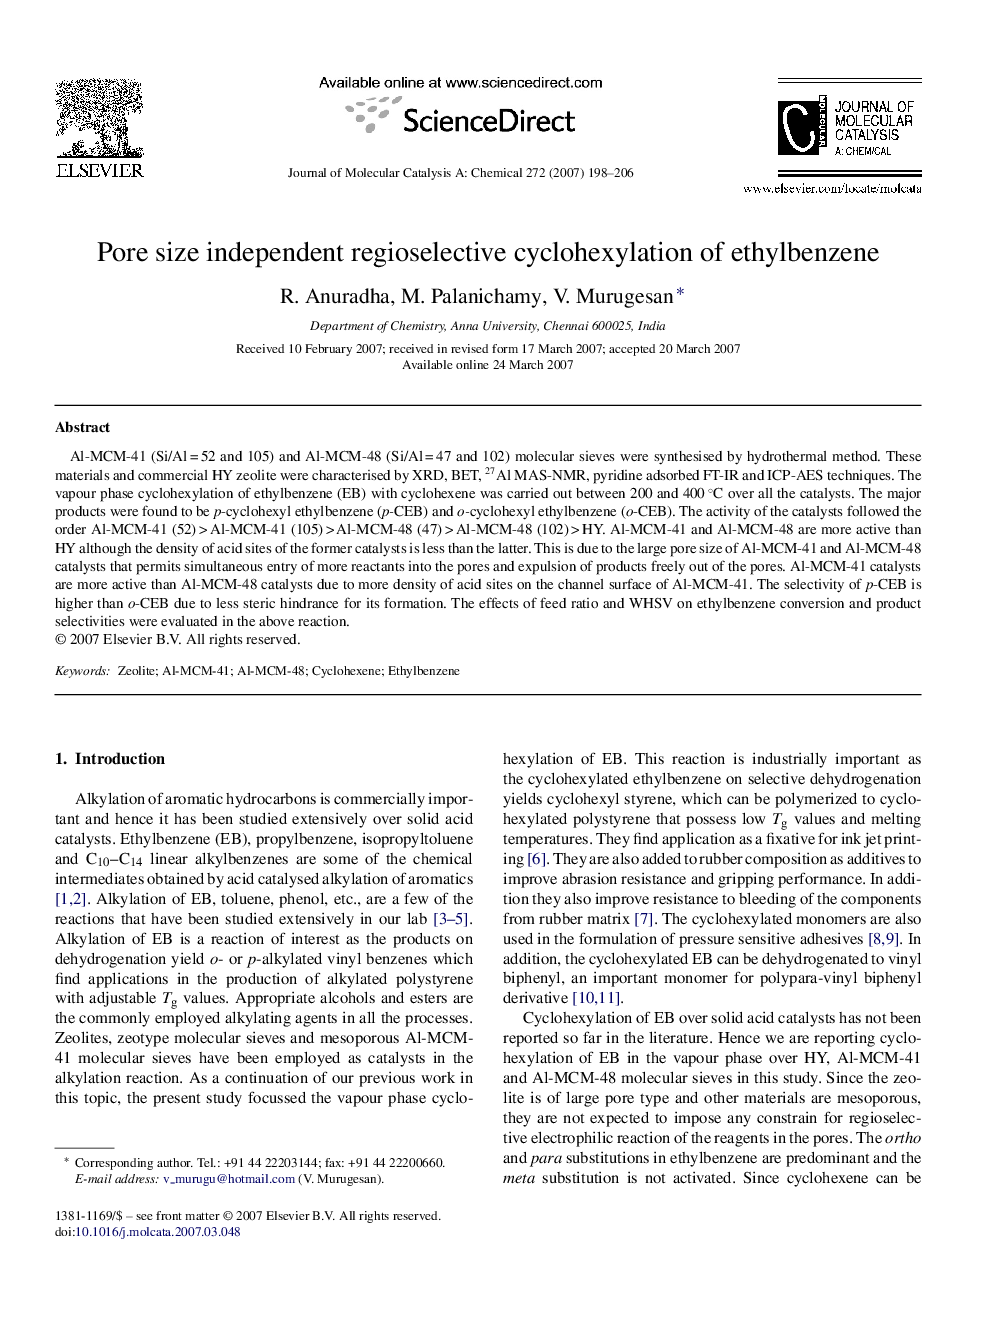 Pore size independent regioselective cyclohexylation of ethylbenzene